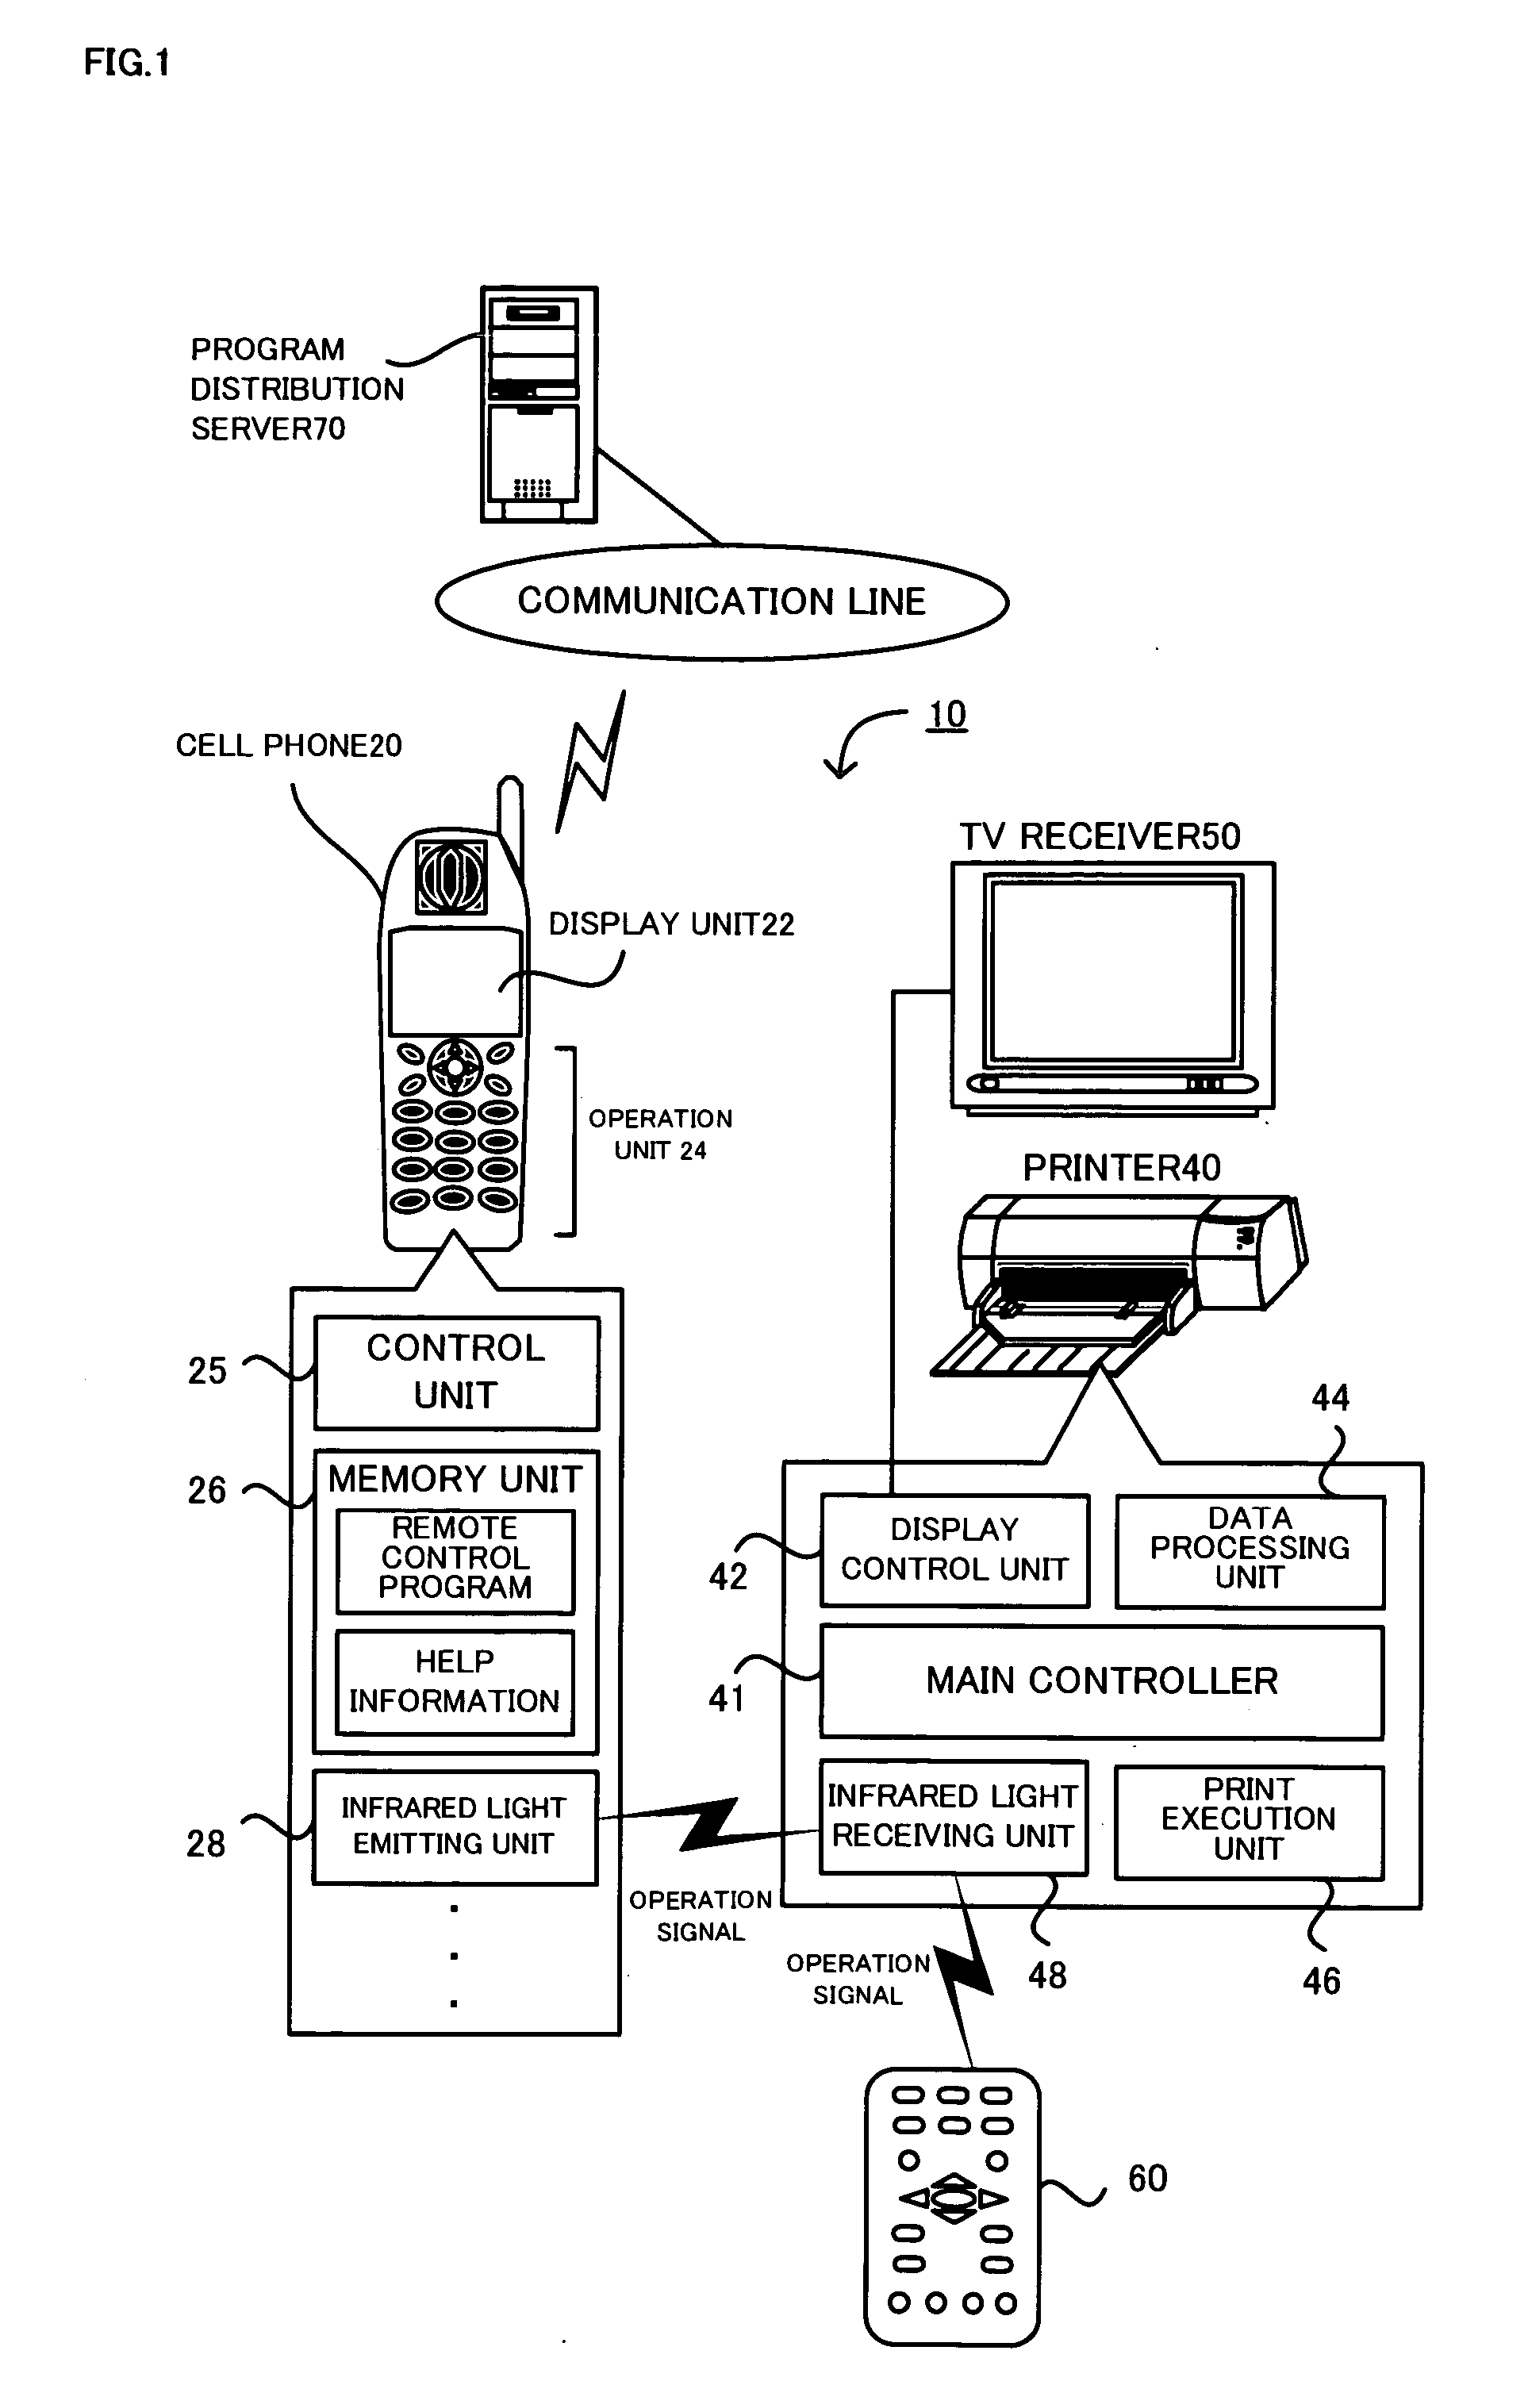 Mobile terminal-based remote control technique